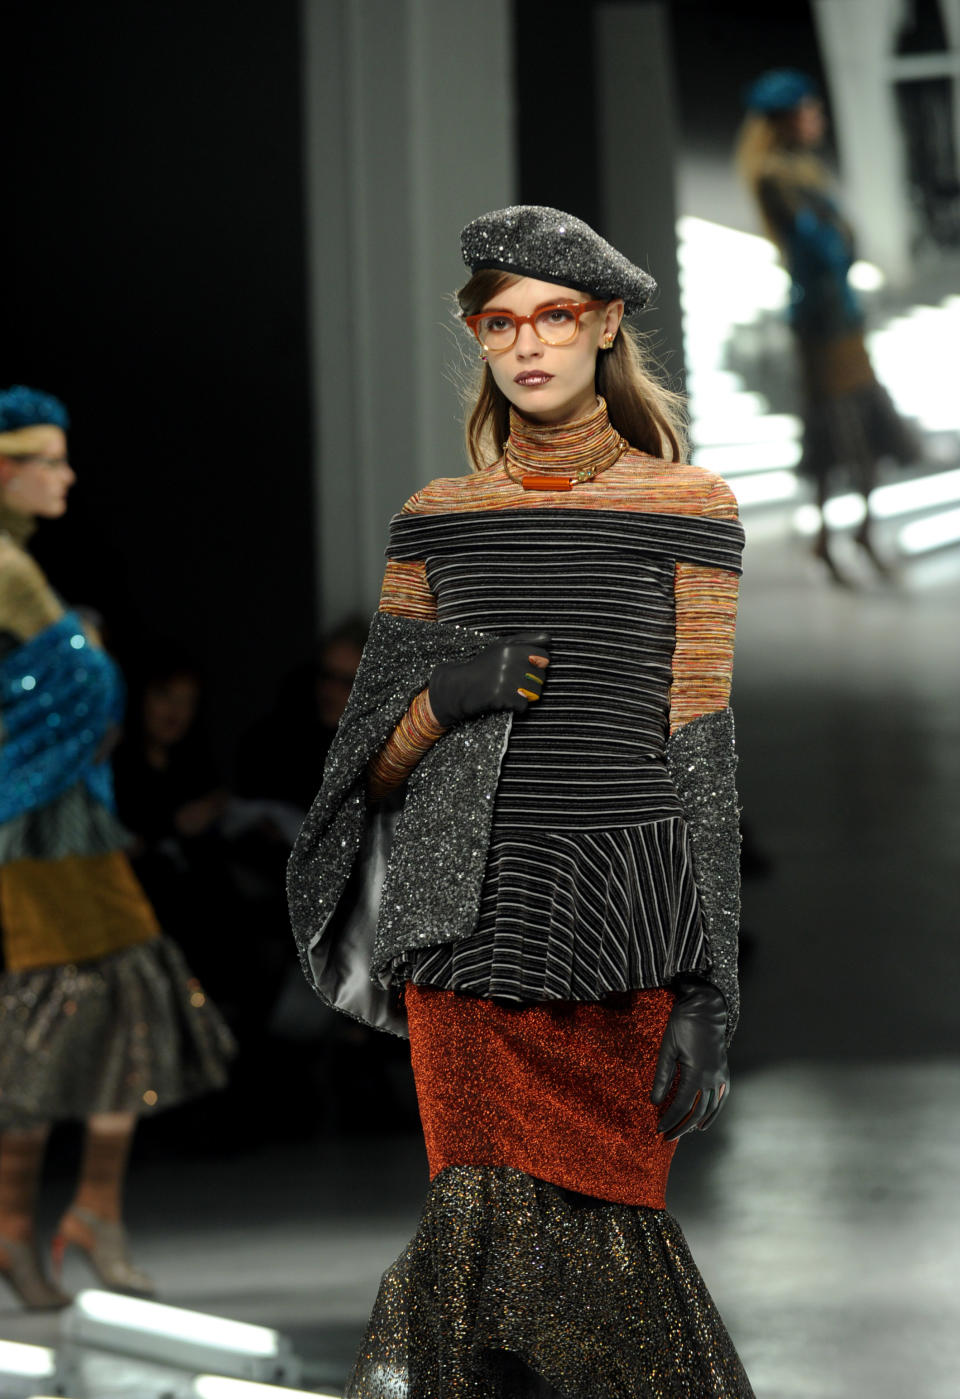 The Rodarte Fall 2014 collection is modeled during Fashion Week in New York, Tuesday, Feb. 11, 2014. (AP Photo/Diane Bondareff)